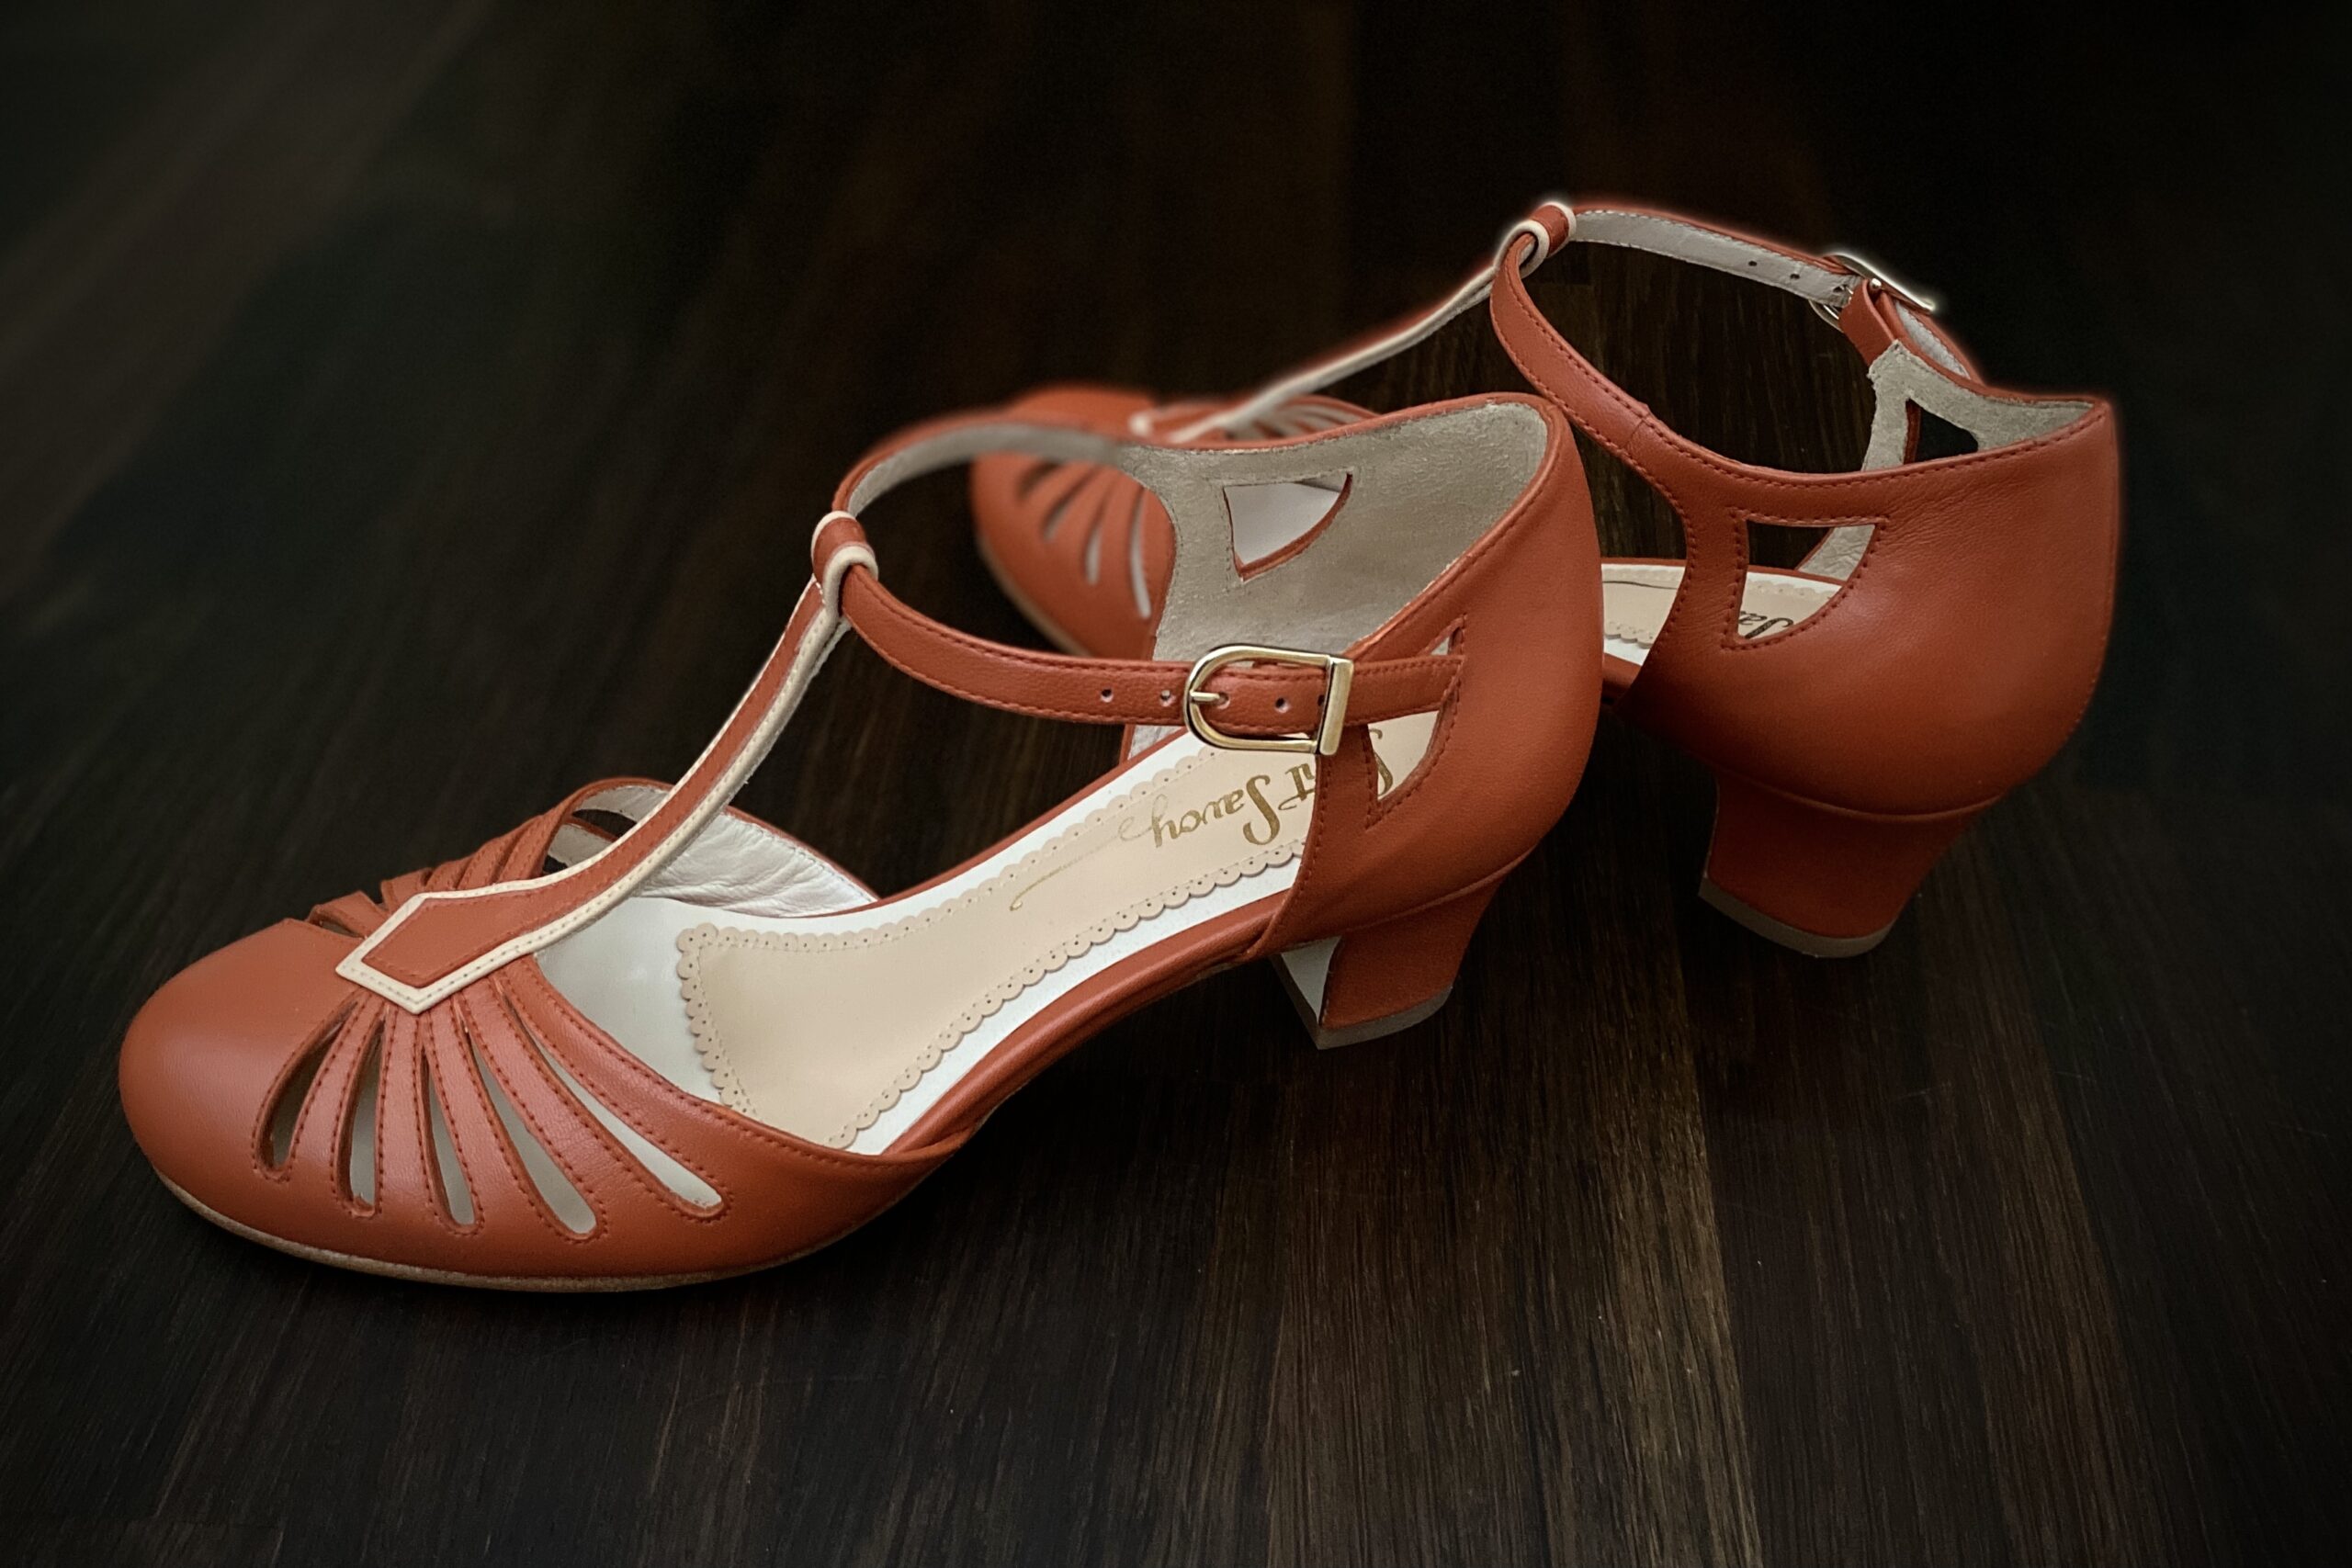 Princess Short Heeled Bridal Shoes.transparent Flower Heeled Shoes.special  Design Shoes.wedding Shoes.cinderella Bridal Shoes - Etsy